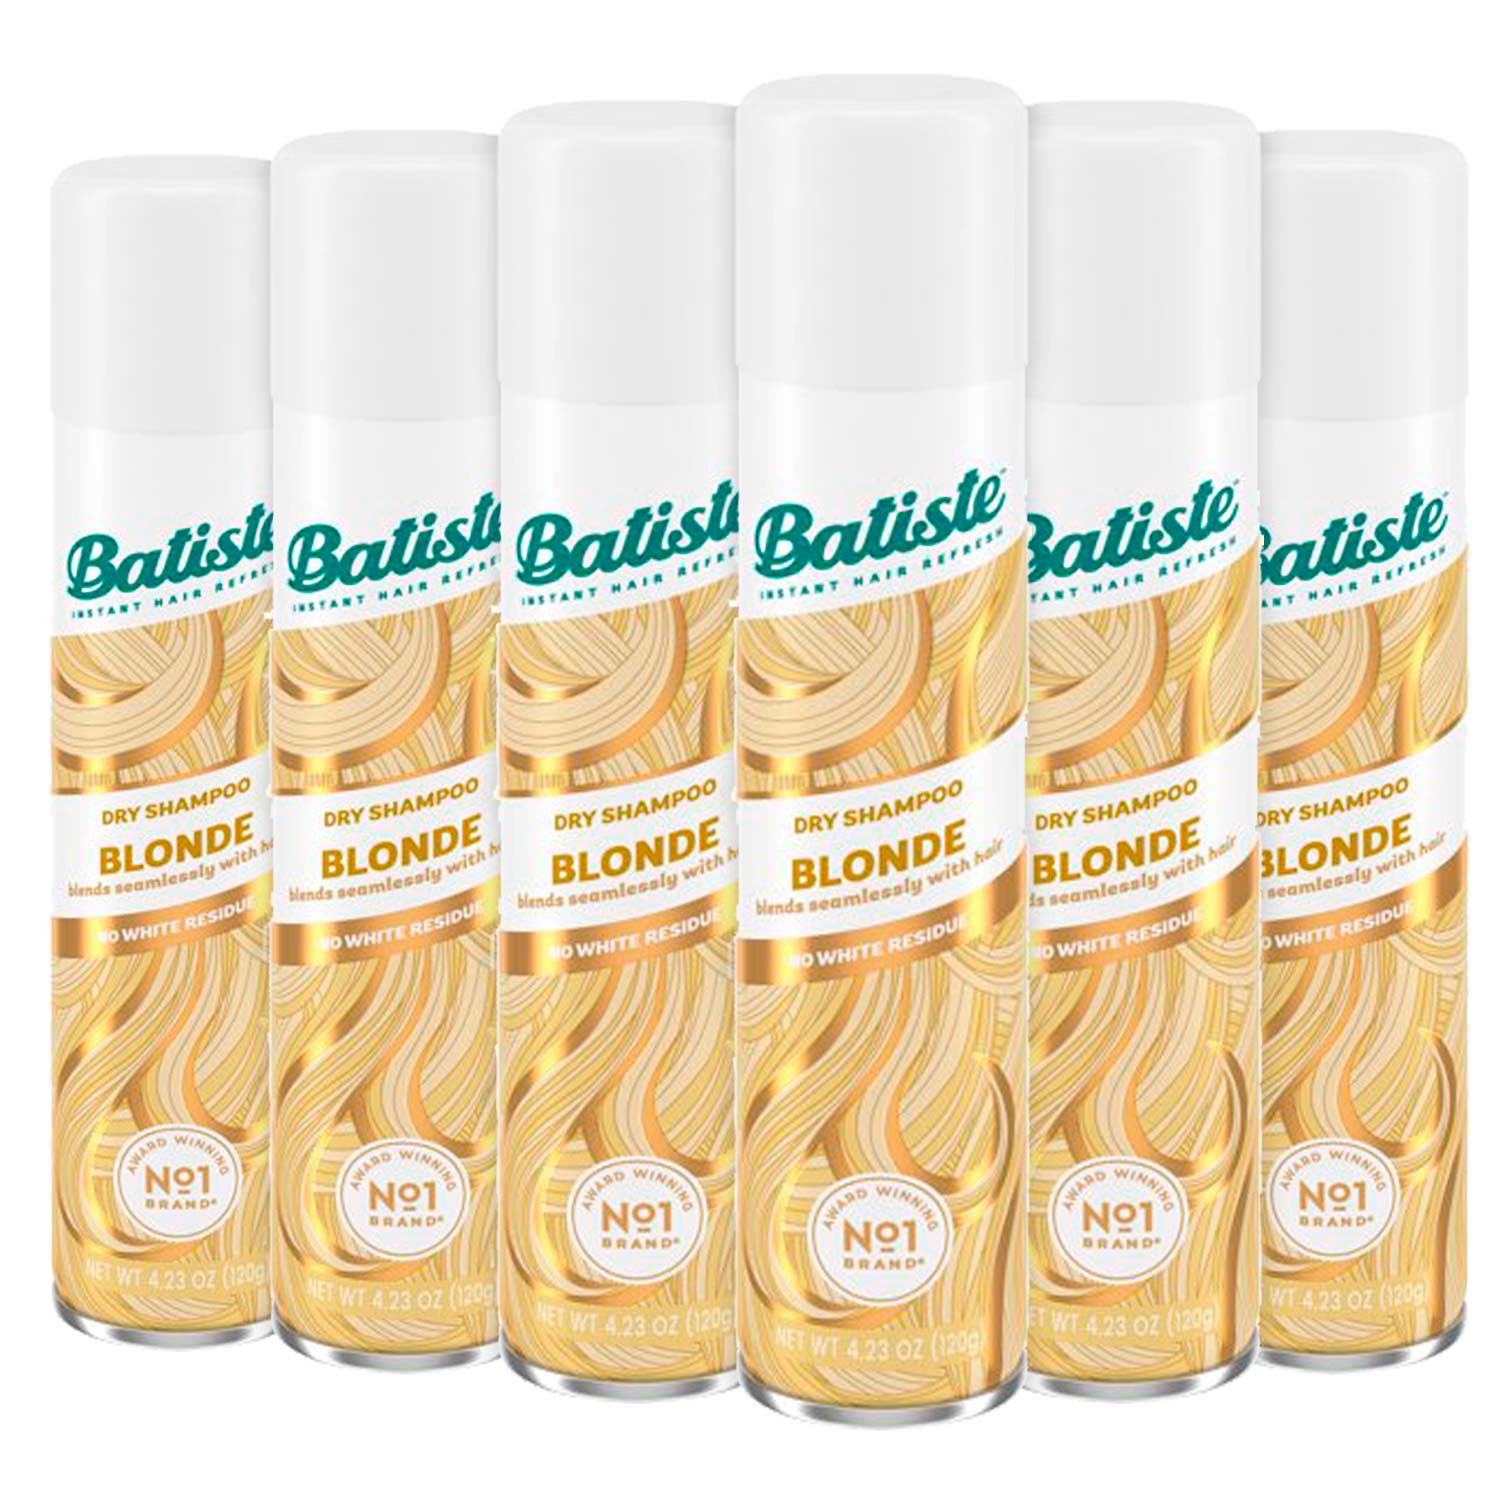 Batiste Dry Brilliant Blonde 4.23 oz (120g) - Pack